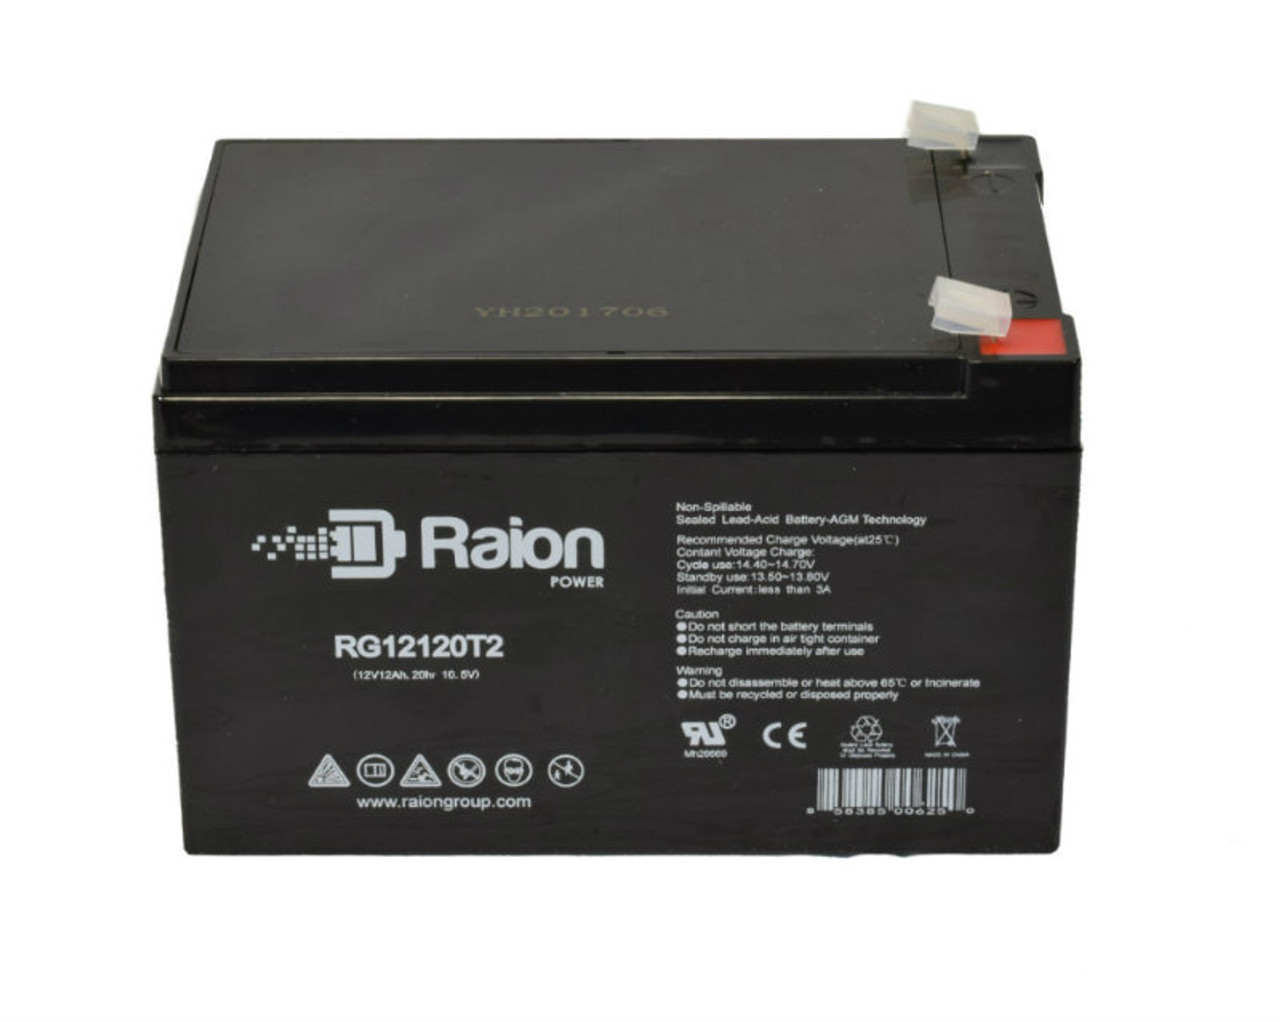 Raion Power RG12120T2 SLA Battery for Bladez Mobility XTR Comp Wheelchairs